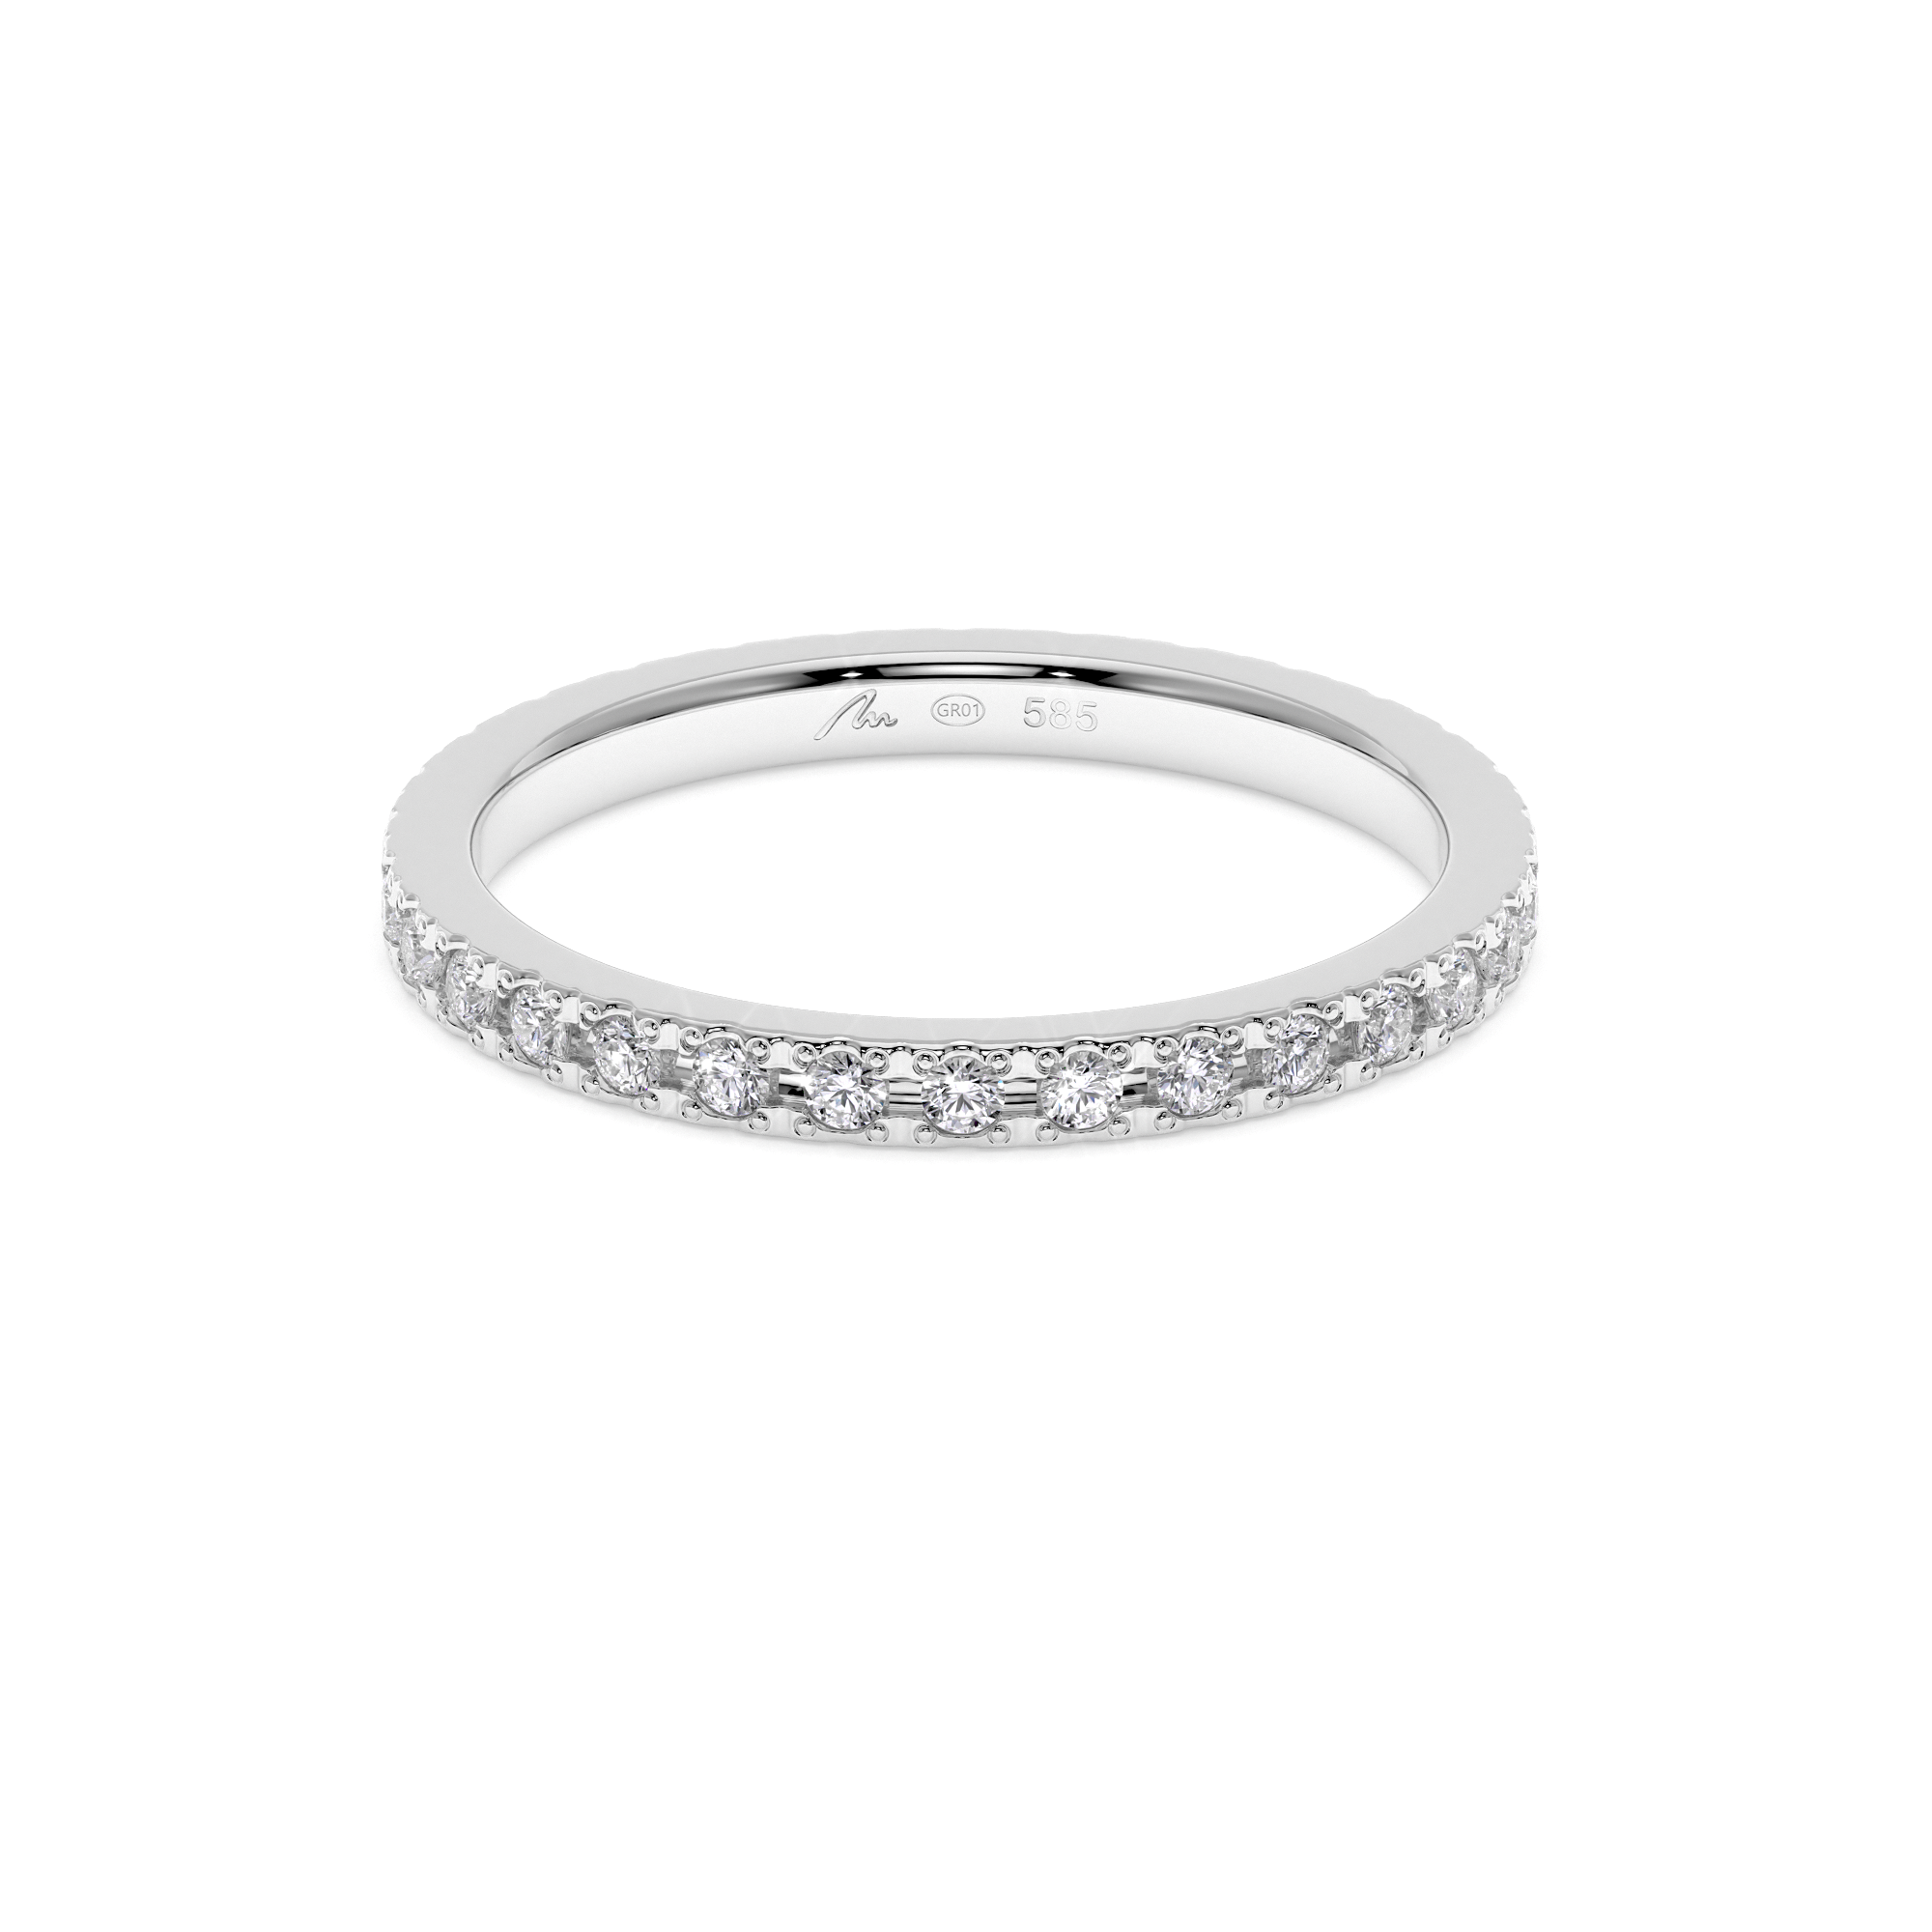 14 k white gold Tennis ring with 0.45 CT white diamonds